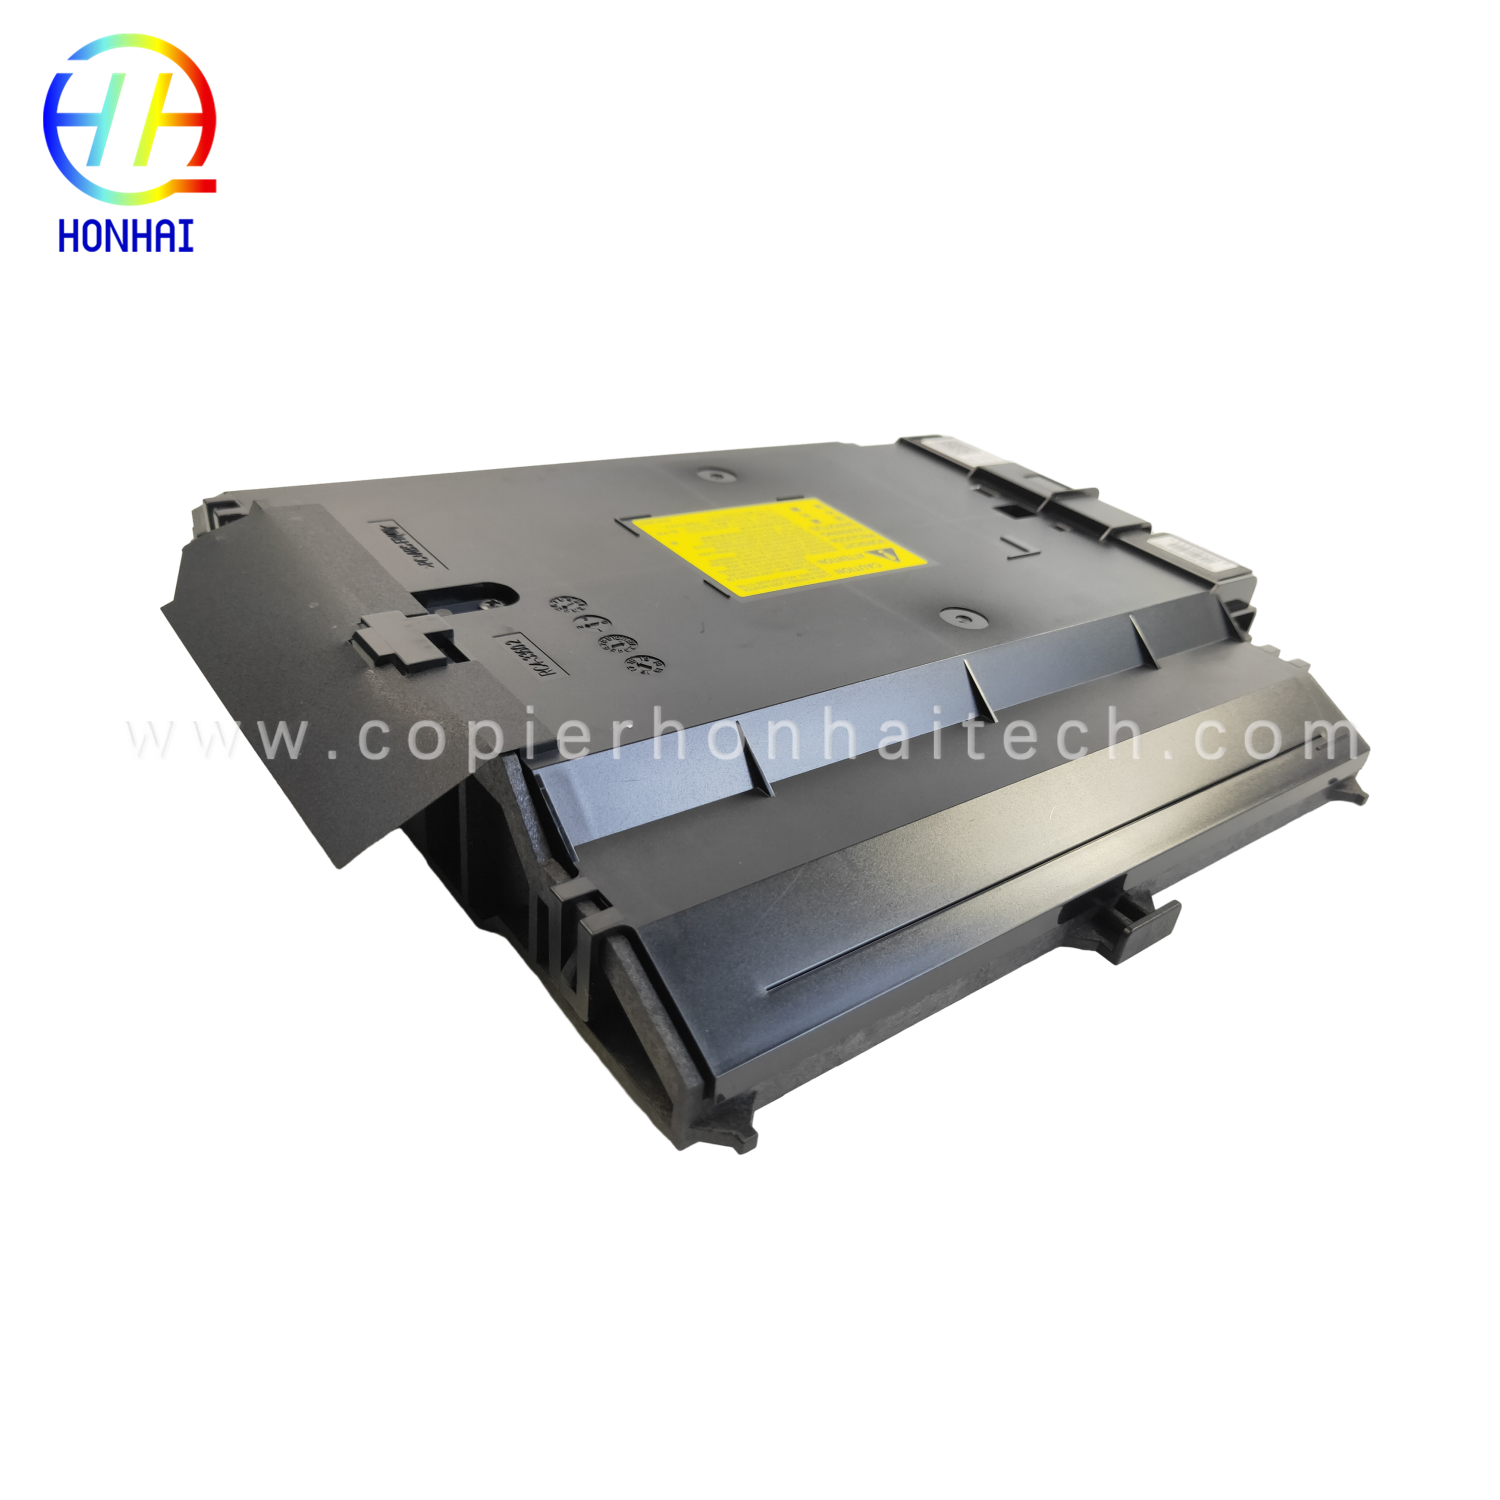 https://www.copierhonhaitech.com/original-laser-scanner-for-hp-m277-product/